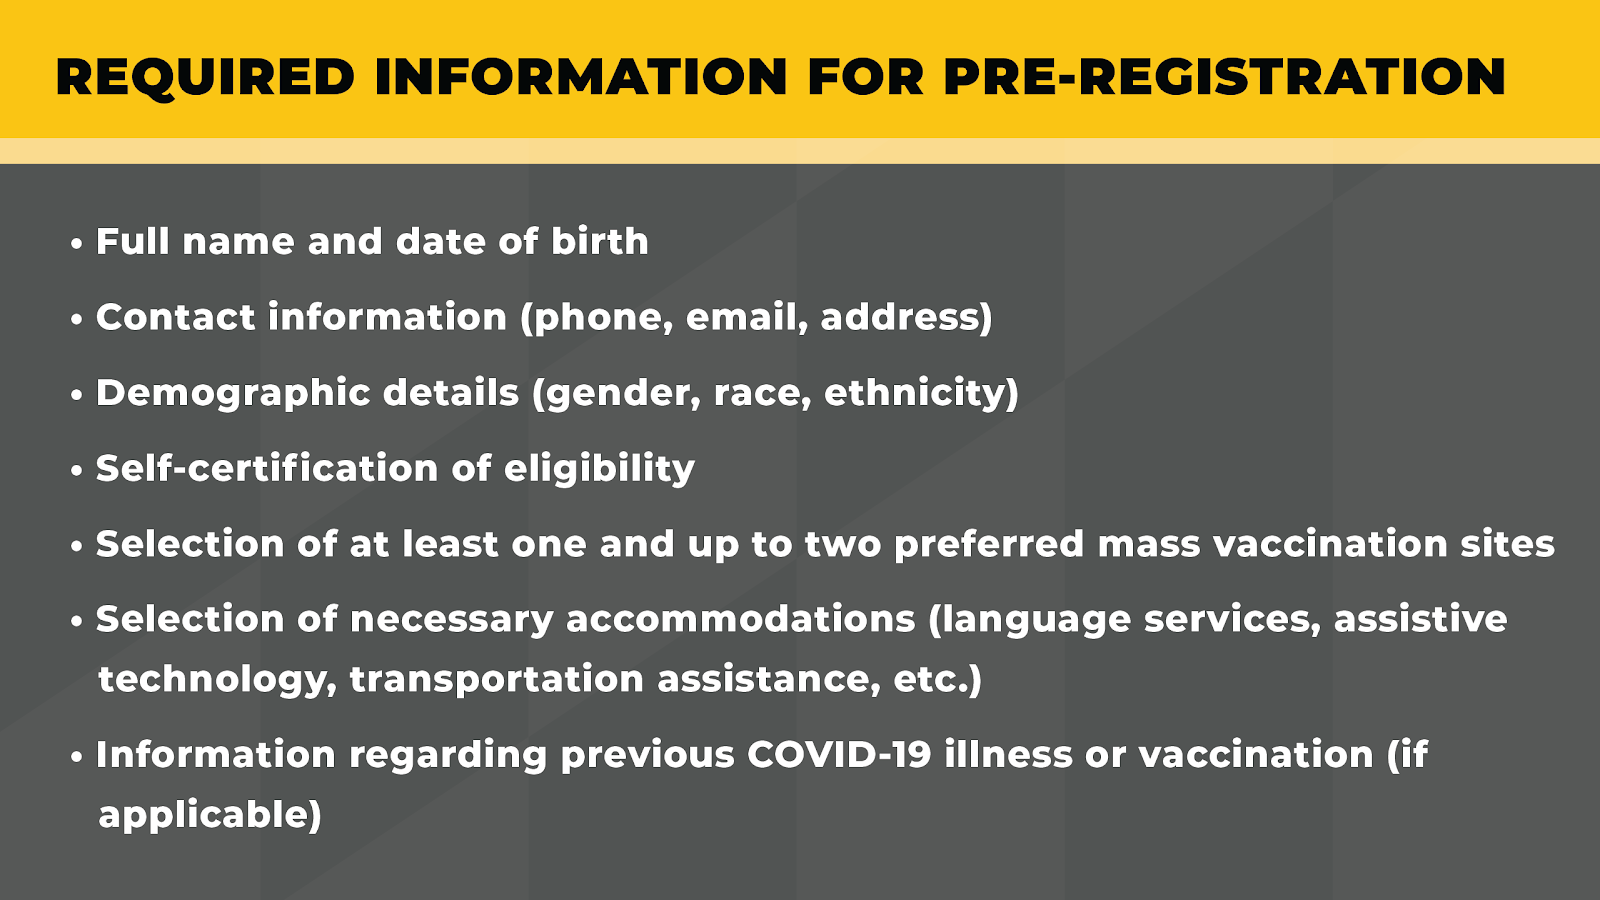 Registration vaccine to how status check Seeking information